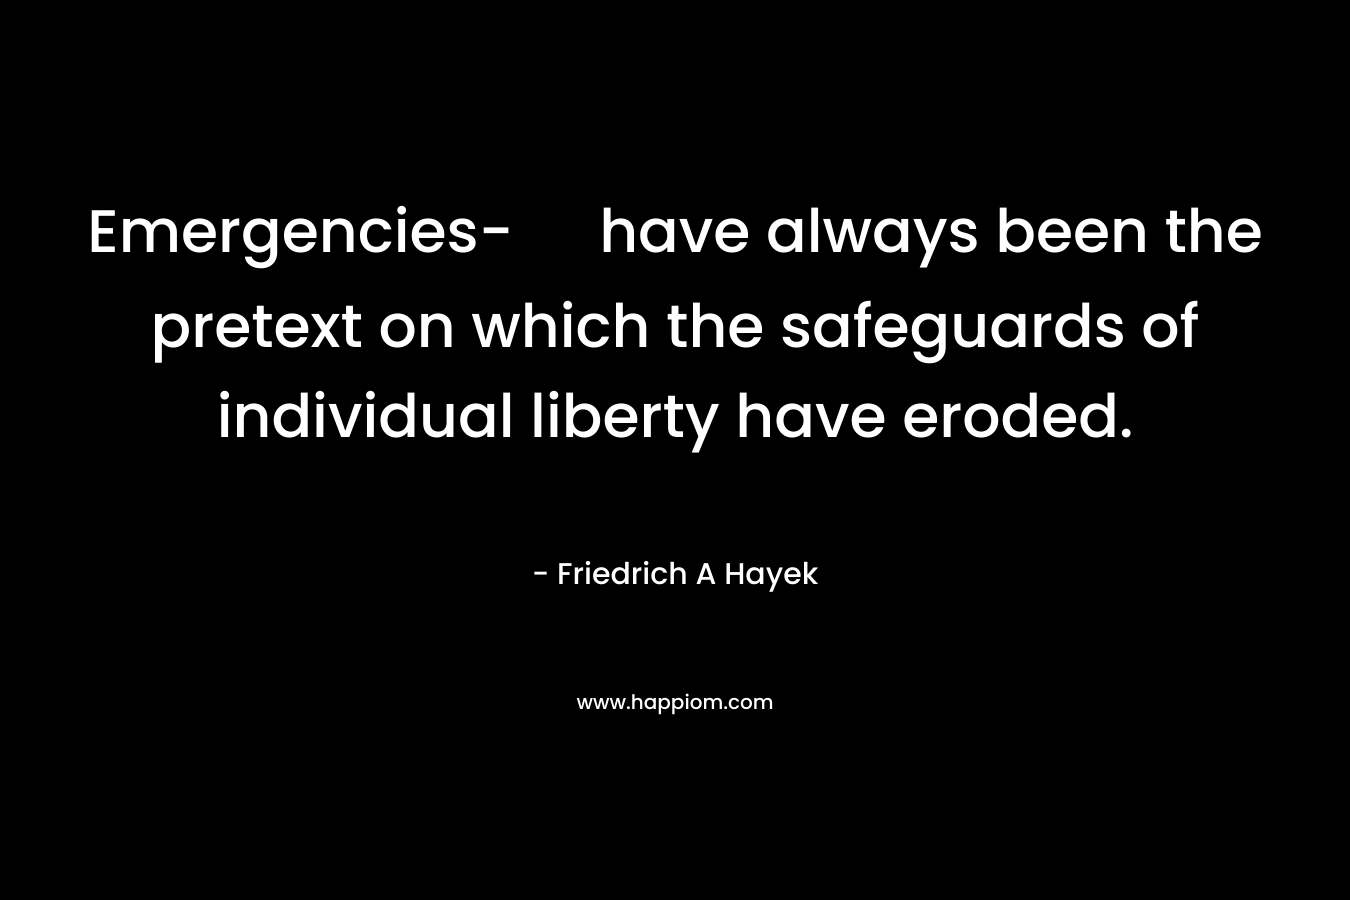 Emergencies- have always been the pretext on which the safeguards of individual liberty have eroded.